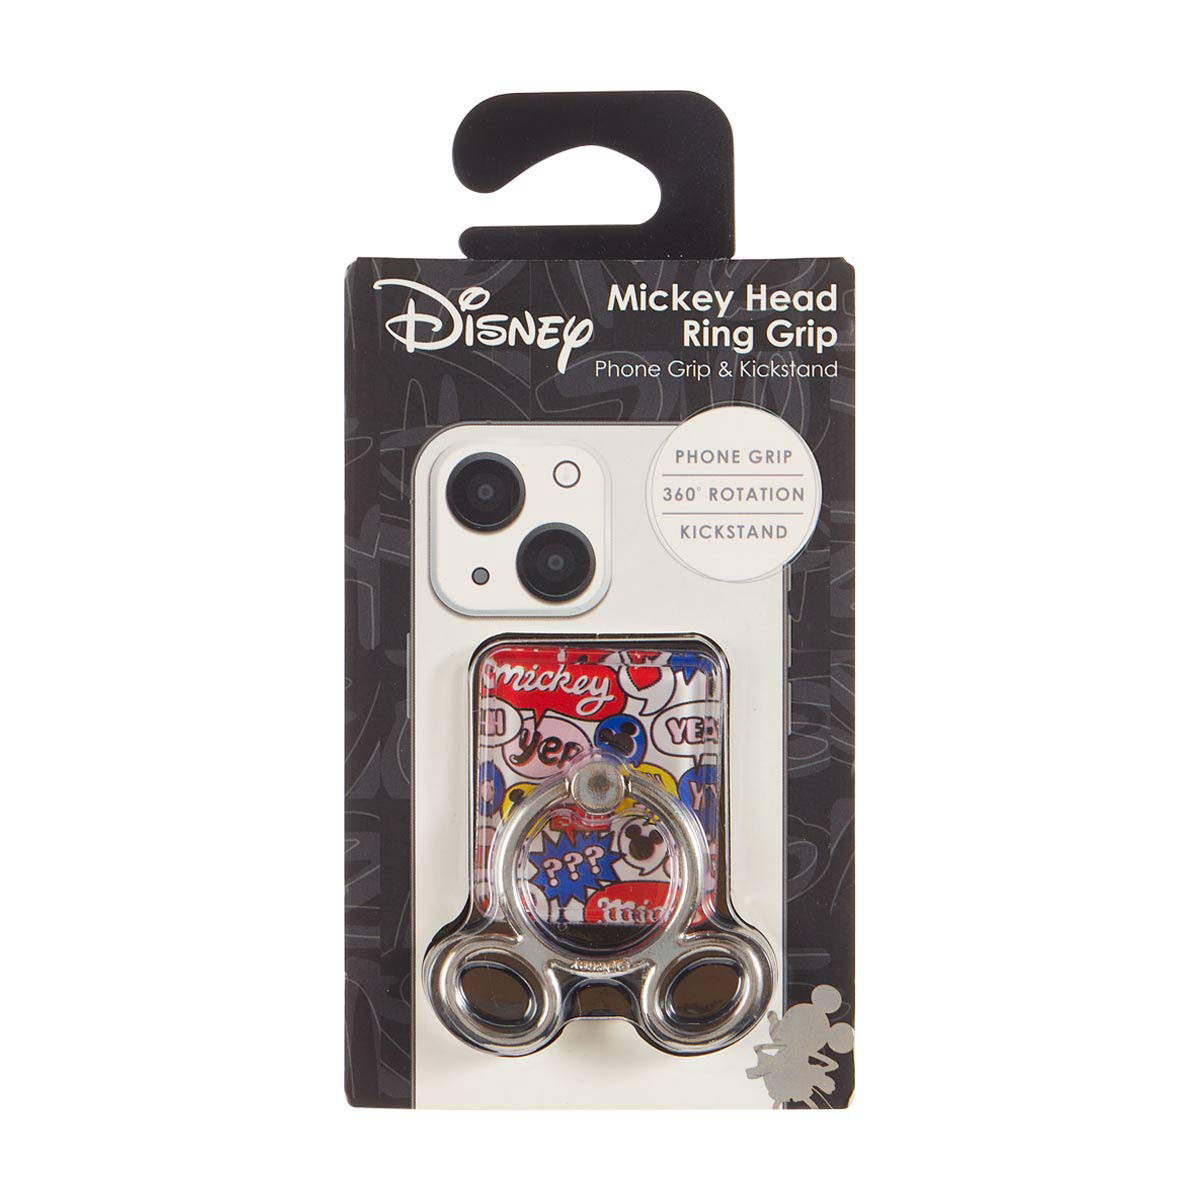 Disney Mickey Head Phone Grip & Kickstand